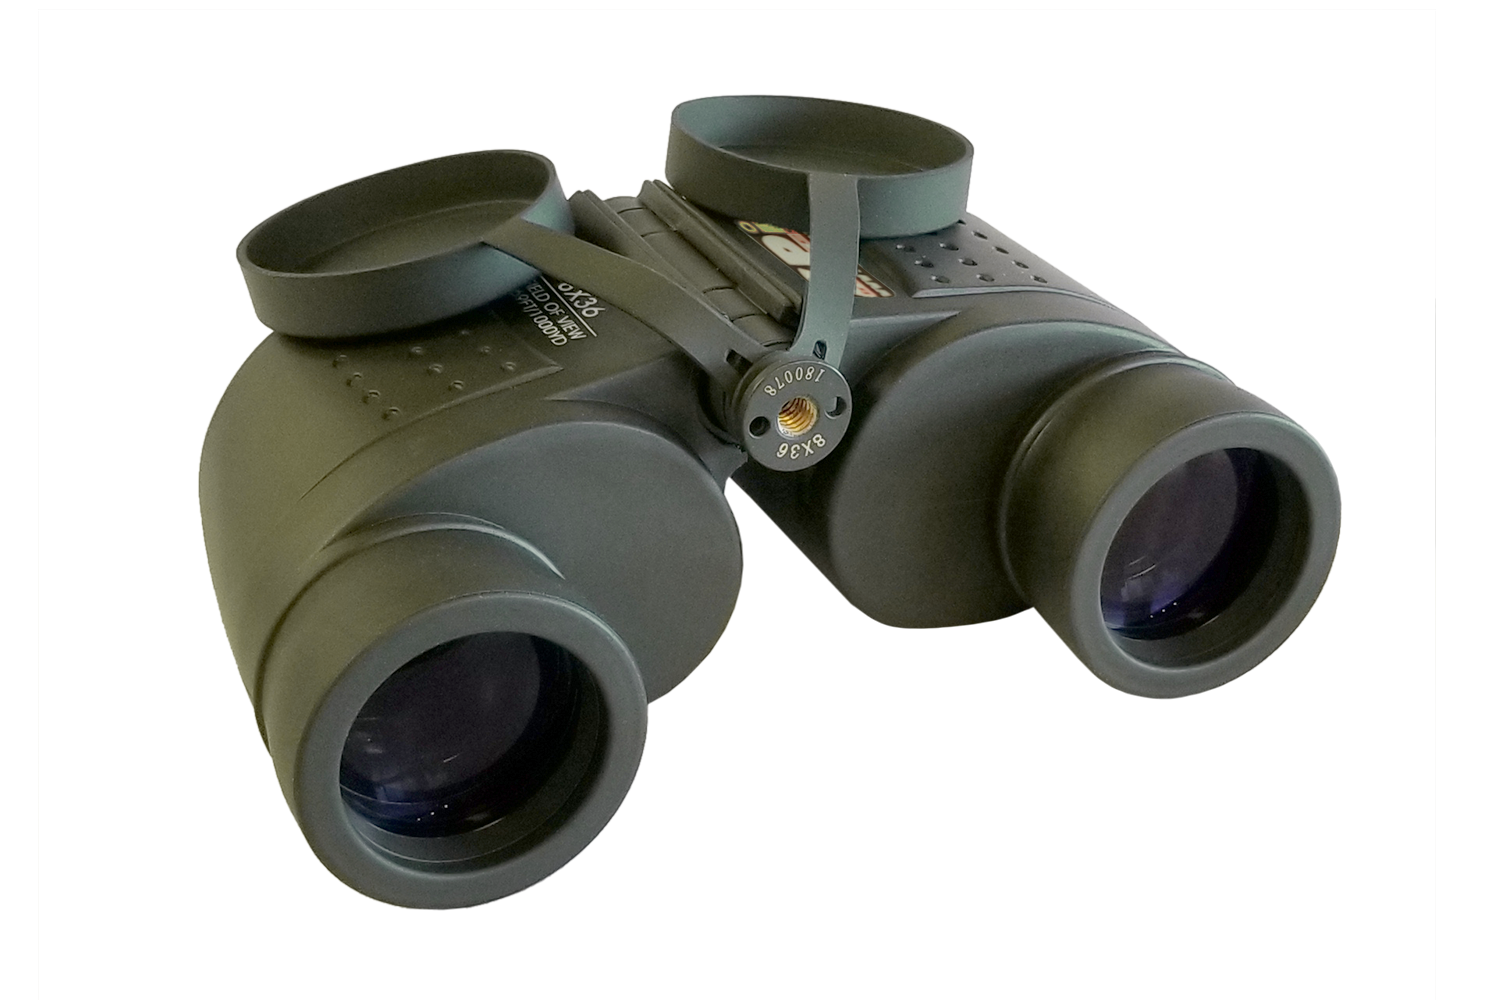 daytime binocular military grade range